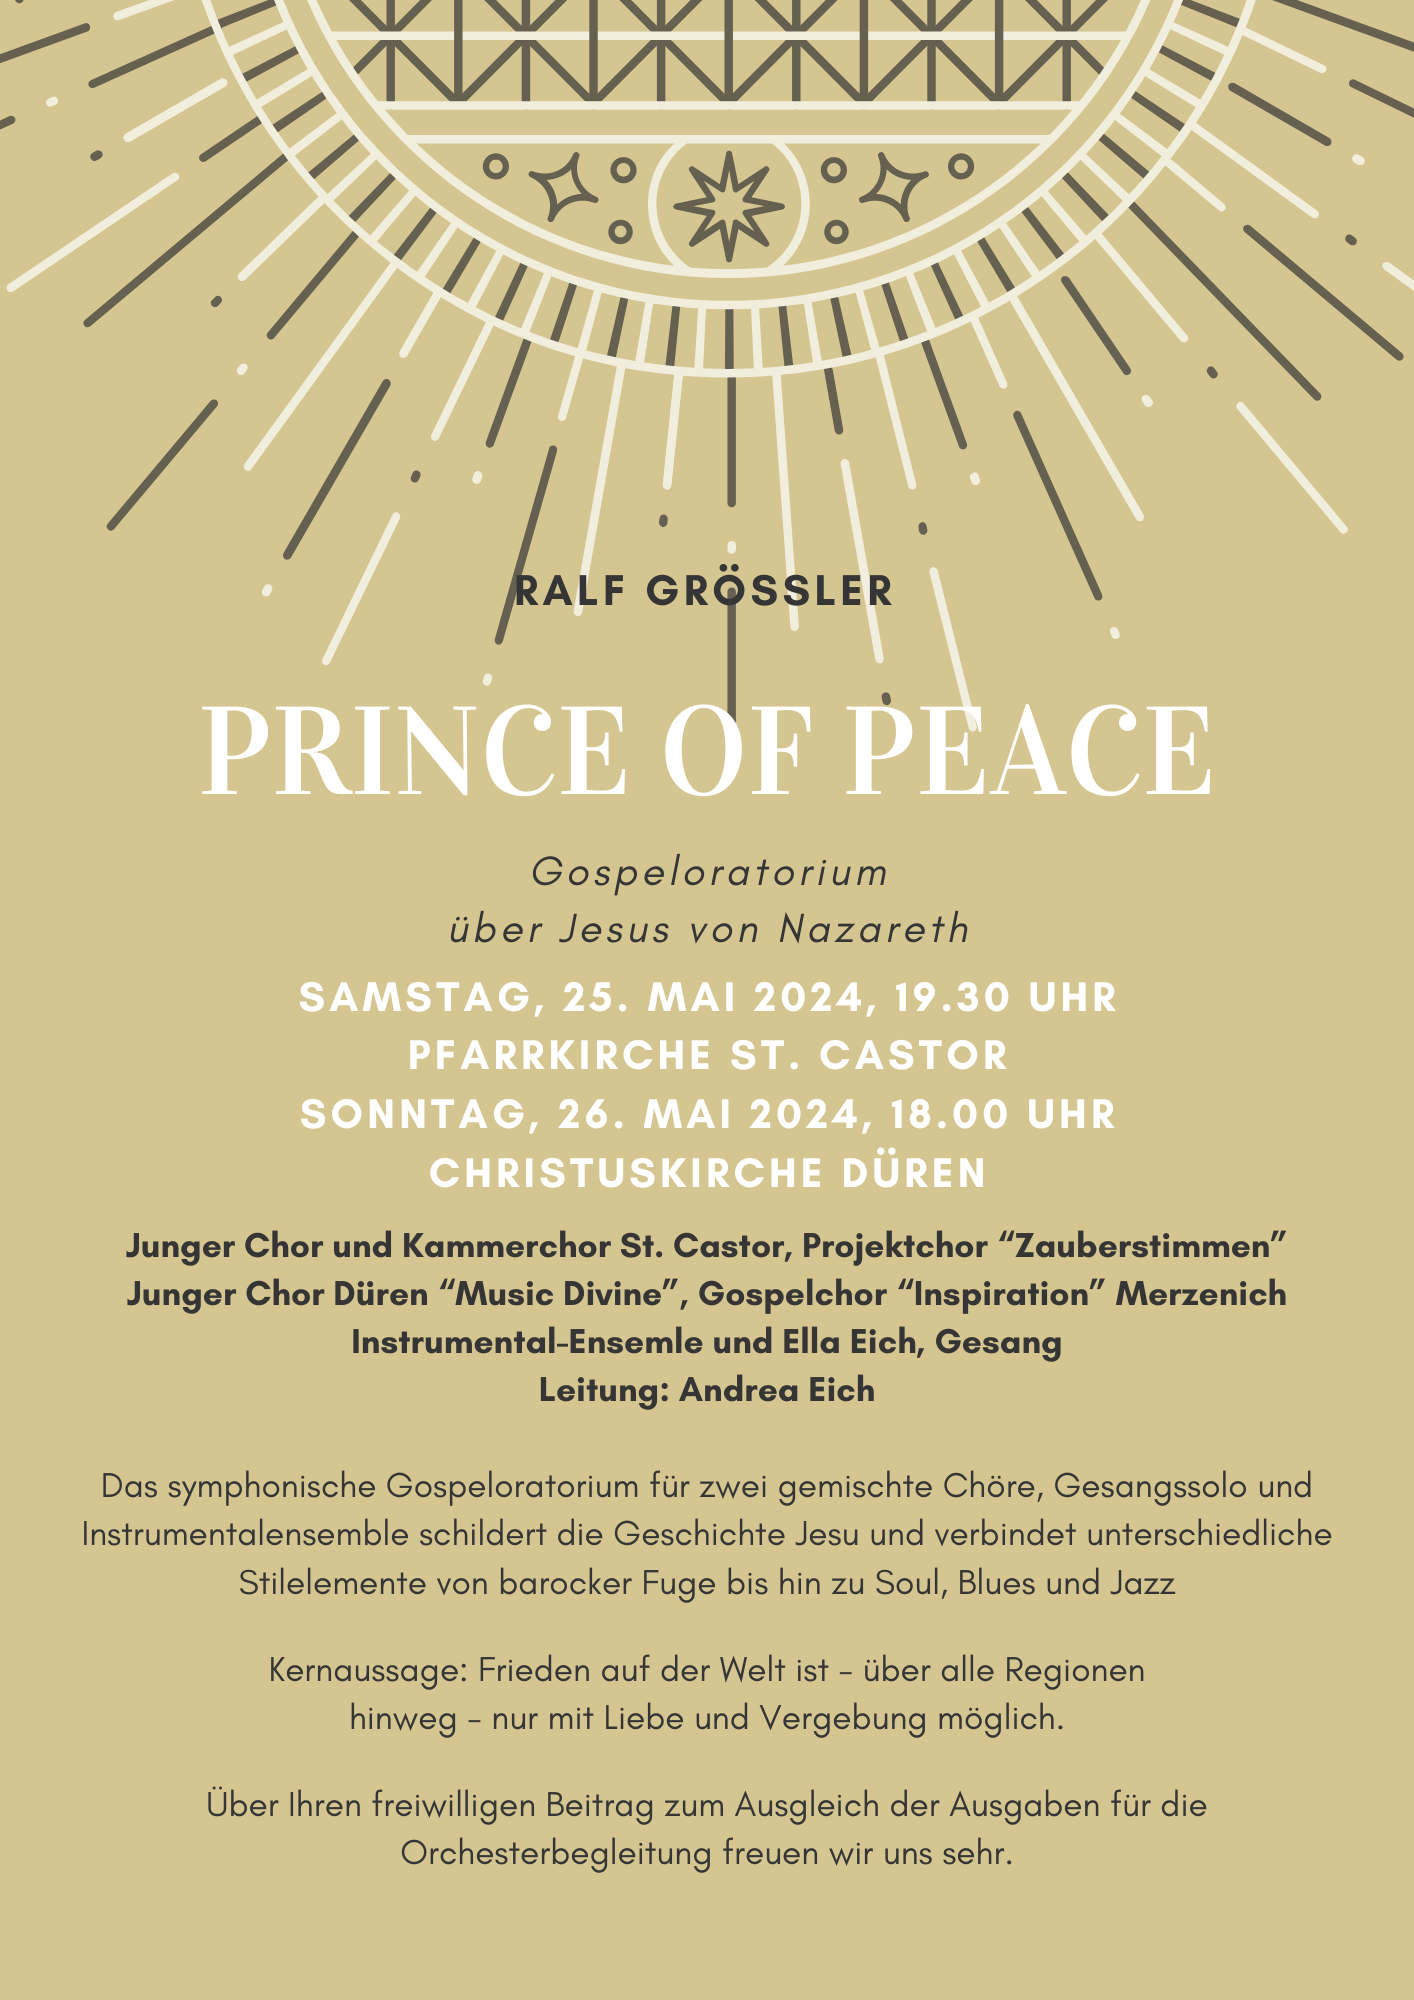 Prince of Peace (c) D. Mannheims